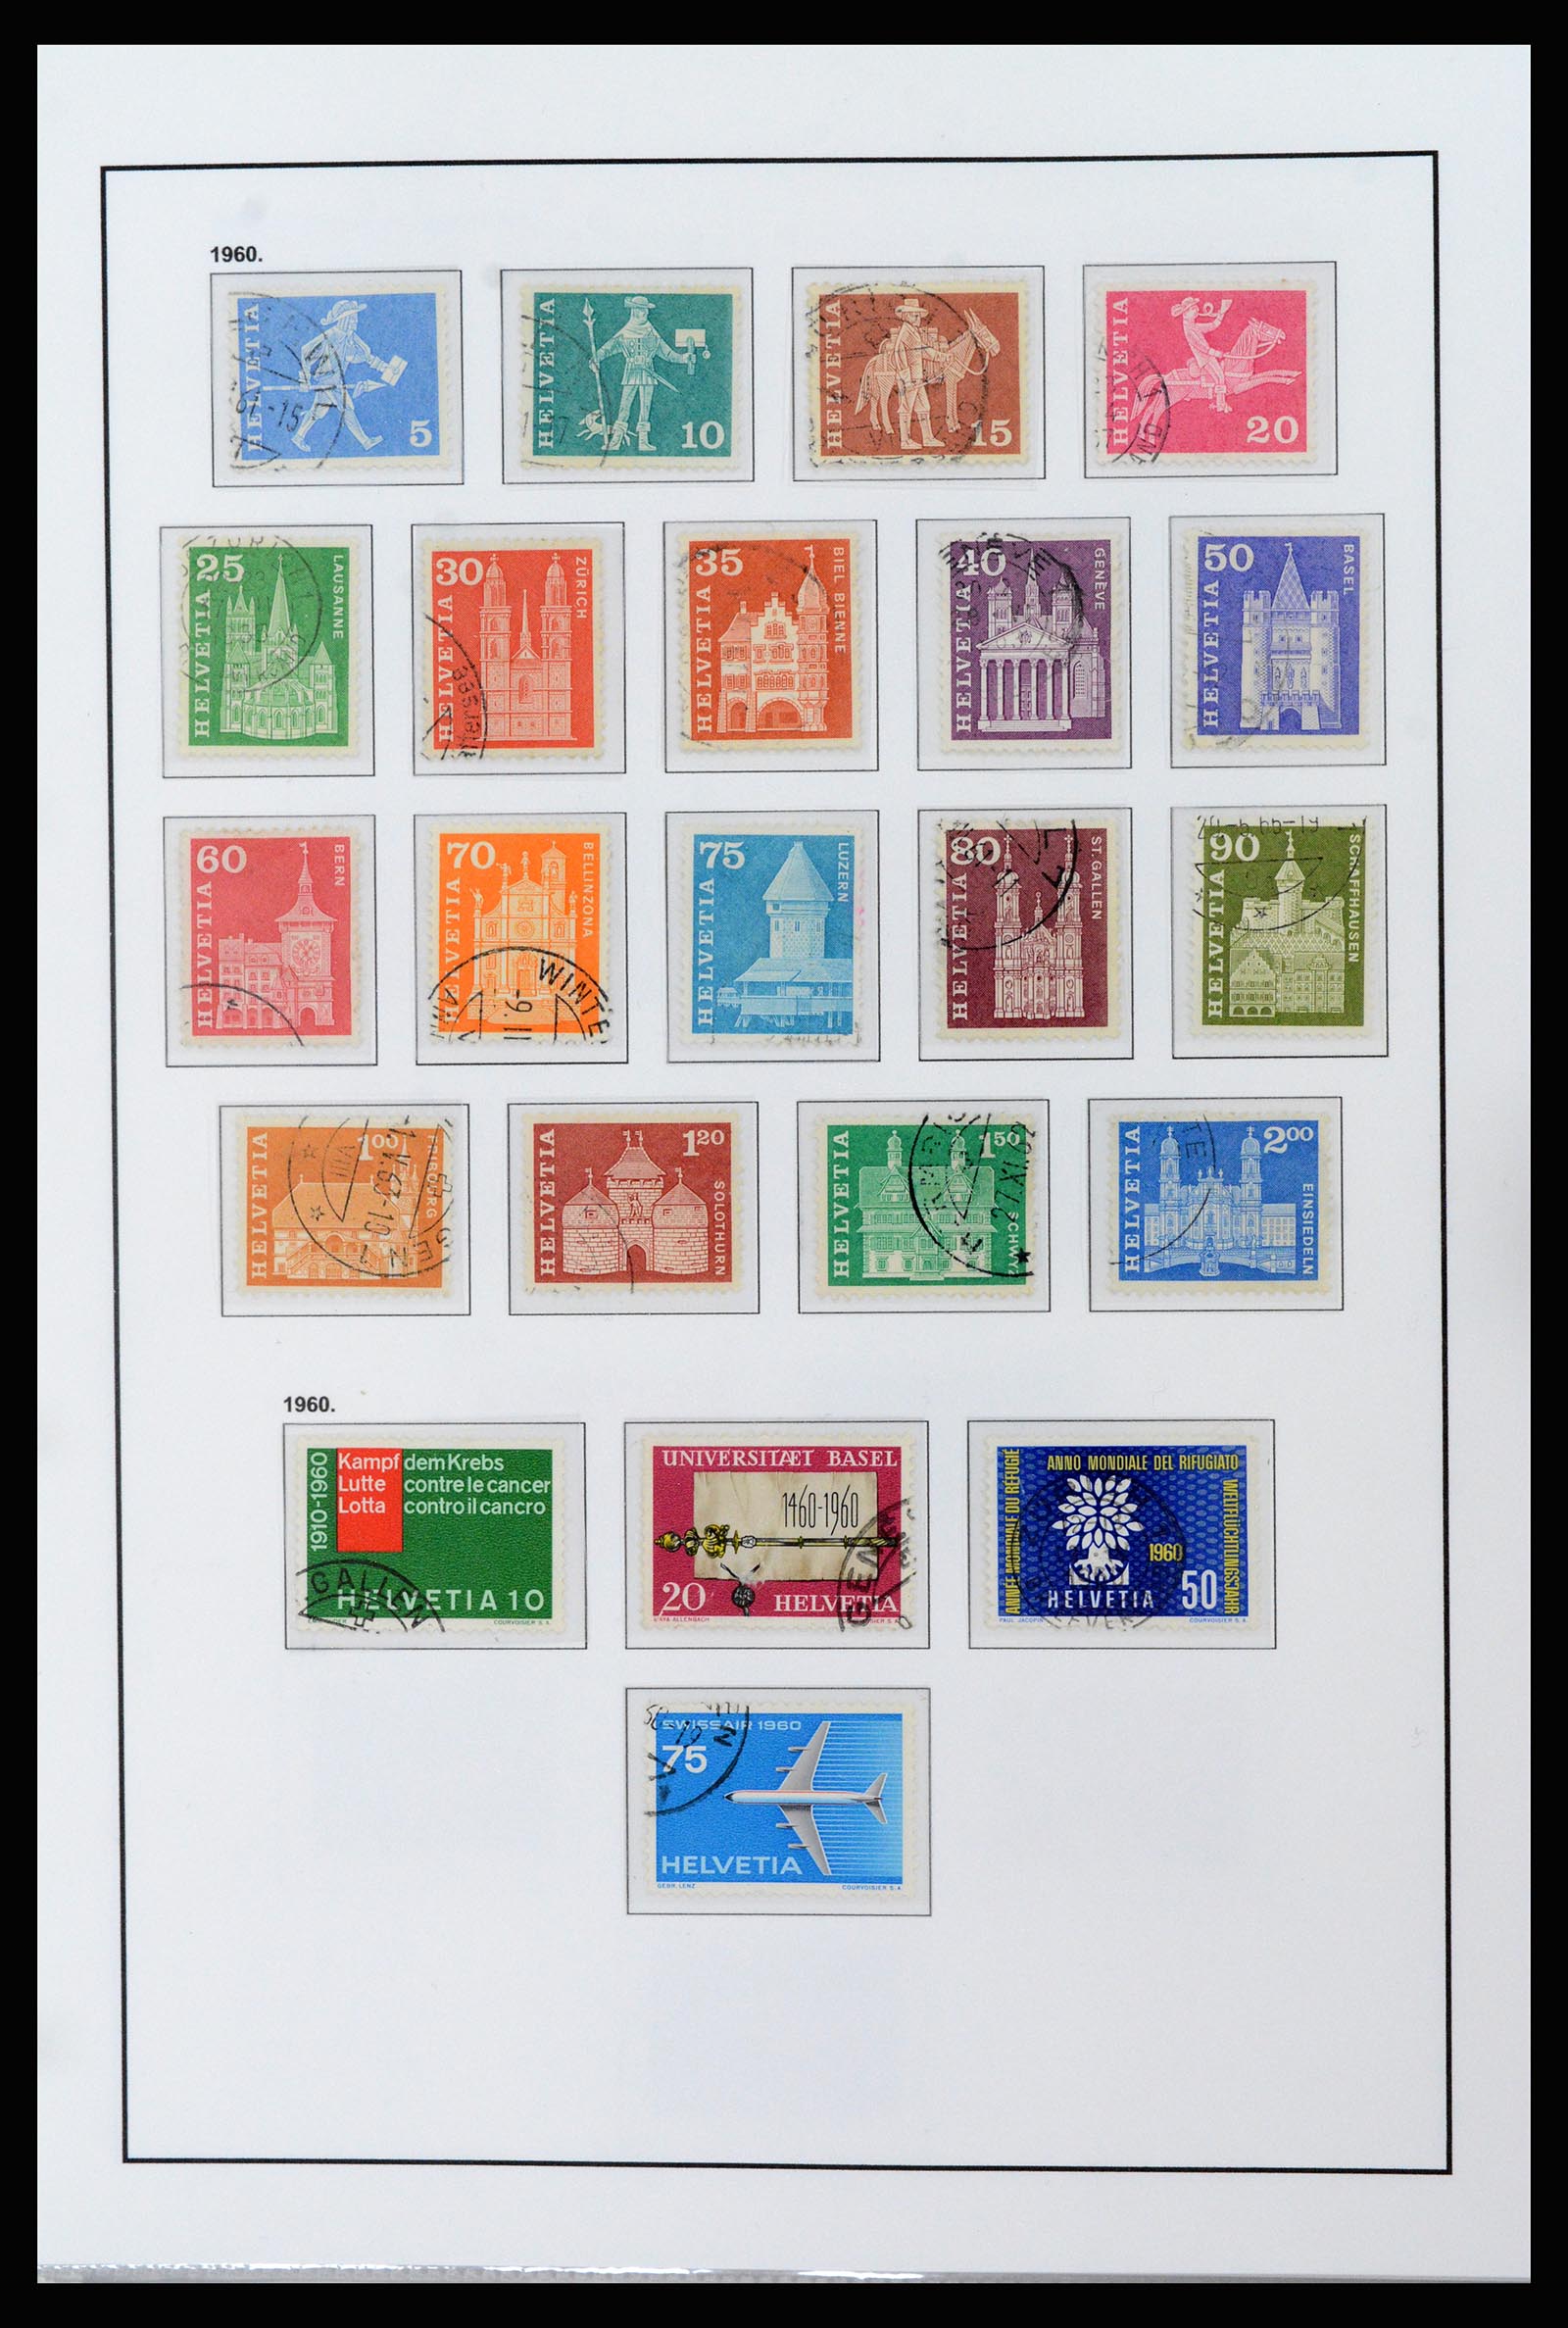 37225 020 - Stamp collection 37225 Switzerland 1854-2020.